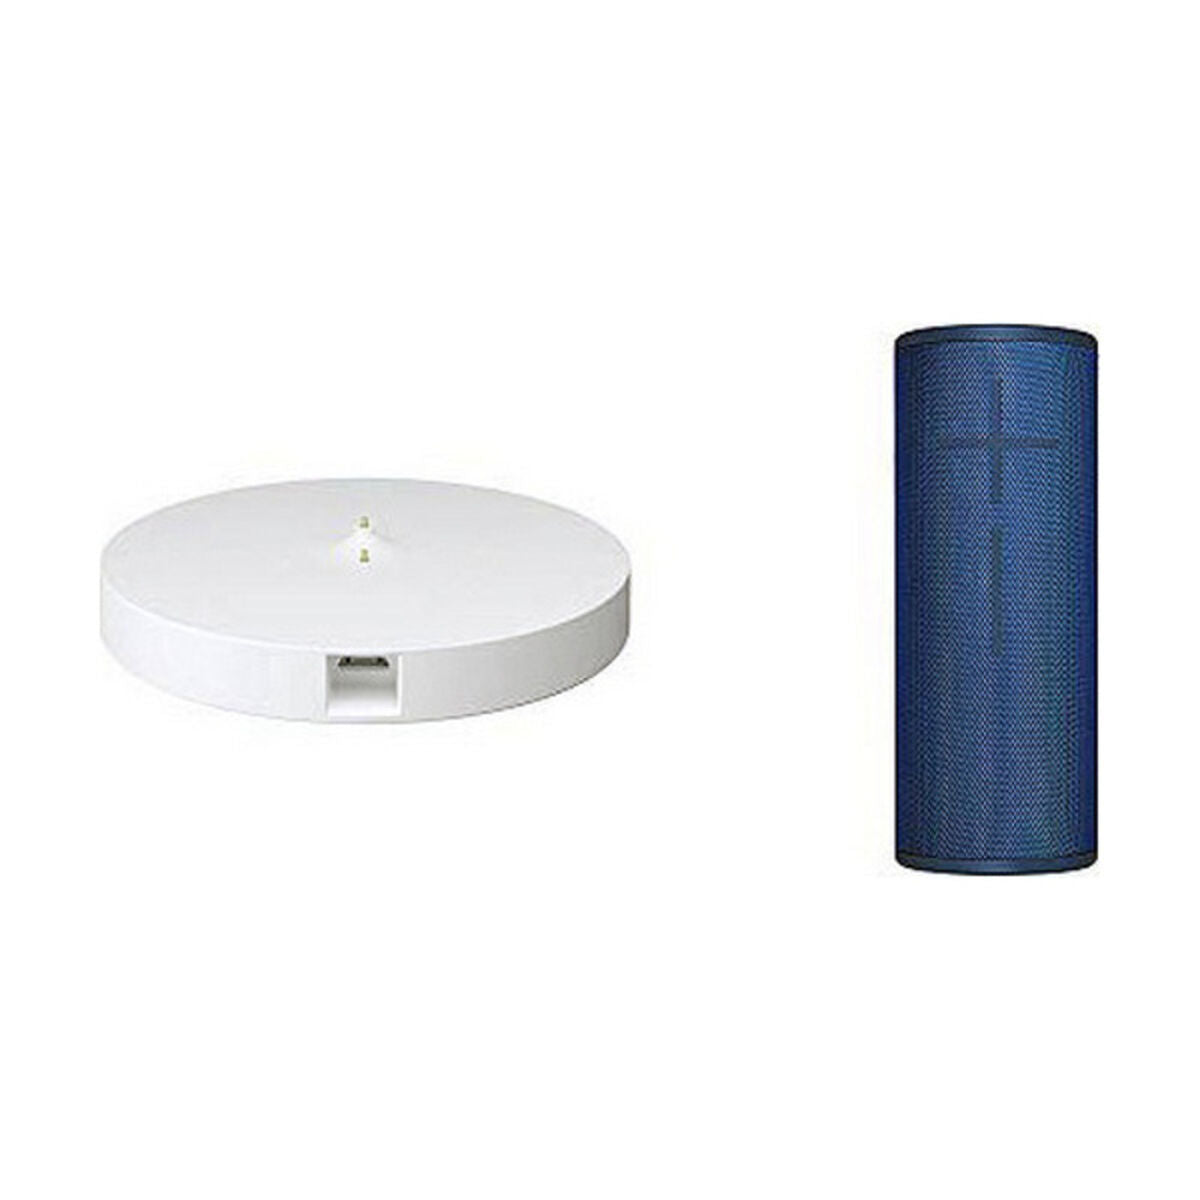 Portable Bluetooth Speakers Logitech 984-001404 IP67 Blue